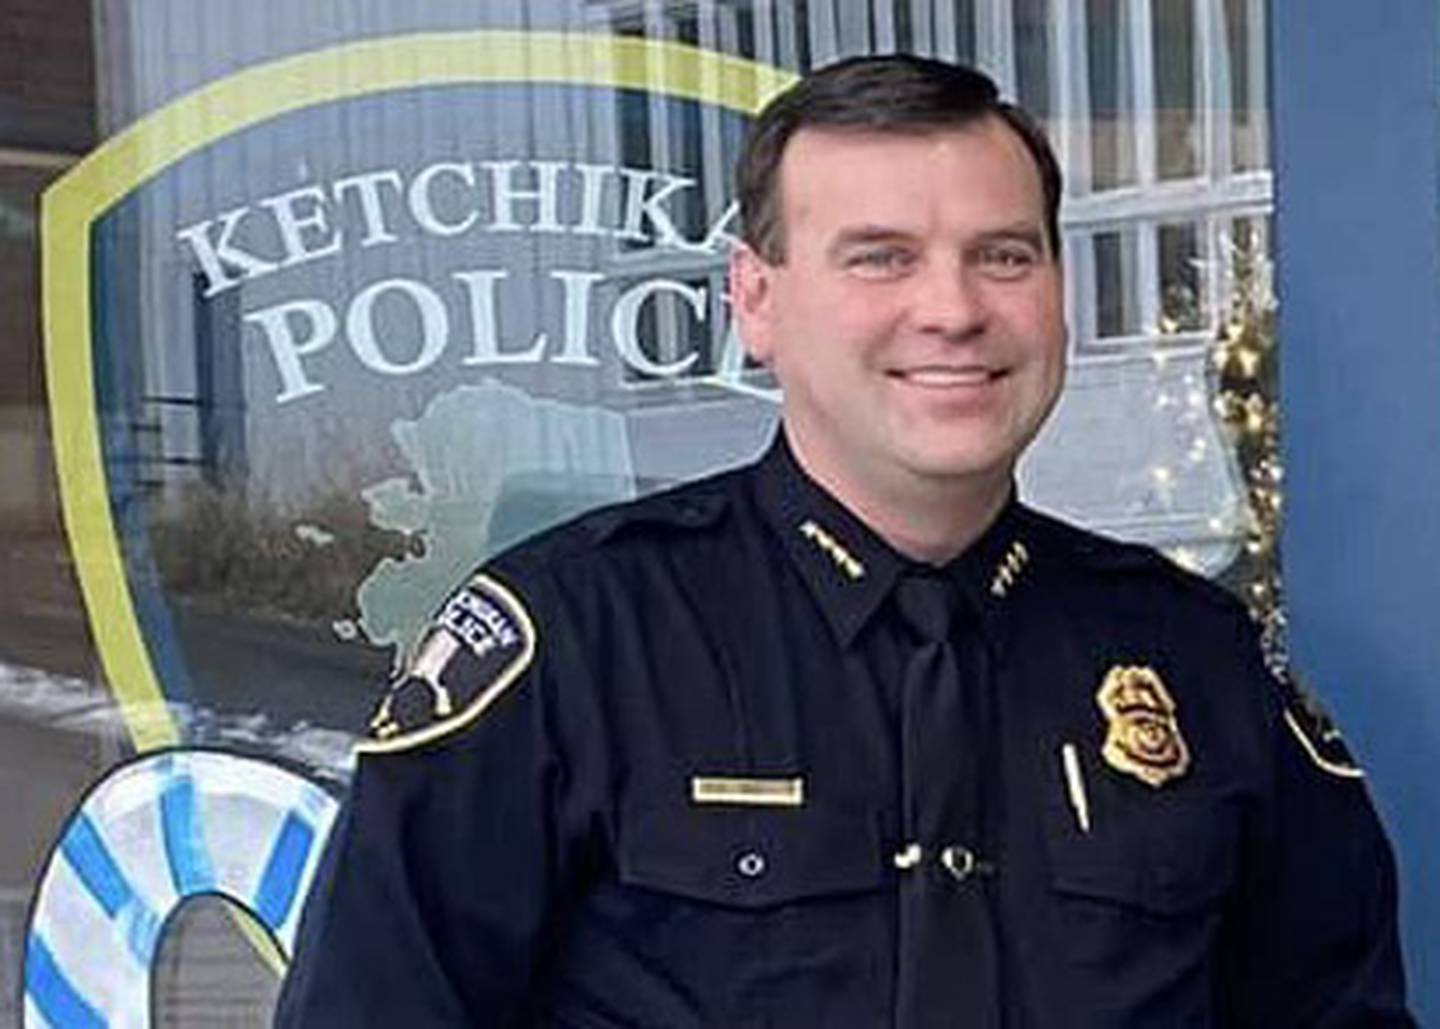 Ketchikan Police Chief